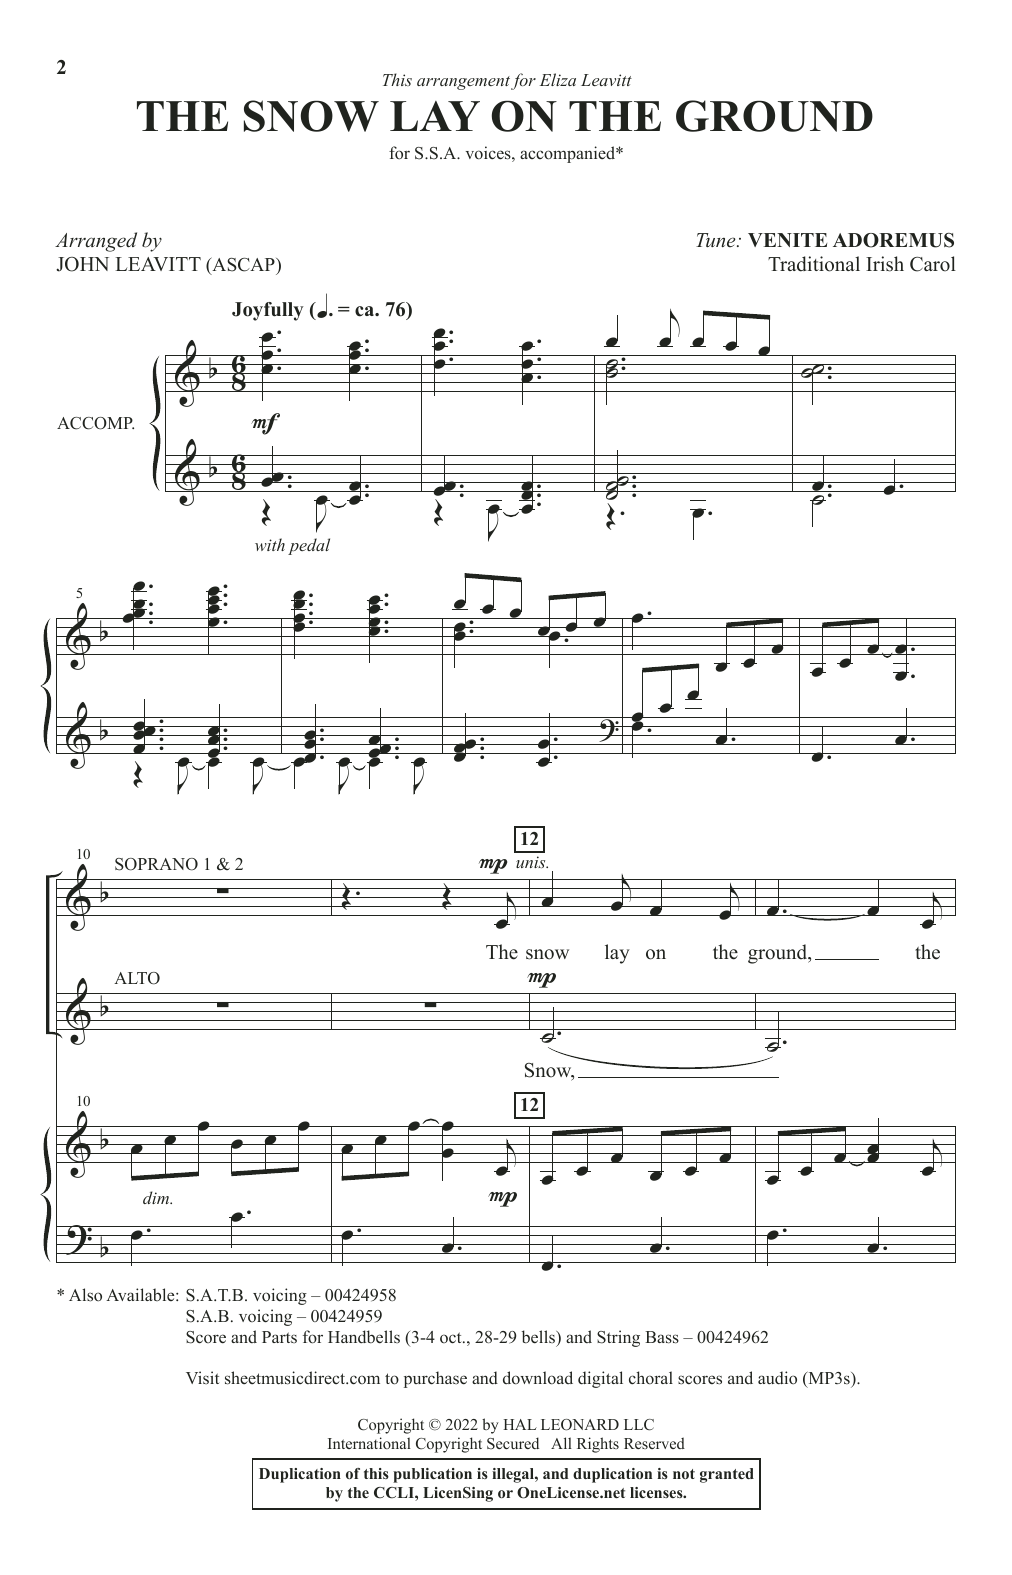 Traditional Irish Carol The Snow Lay On The Ground (arr. John Leavitt) Sheet Music Notes & Chords for SATB Choir - Download or Print PDF